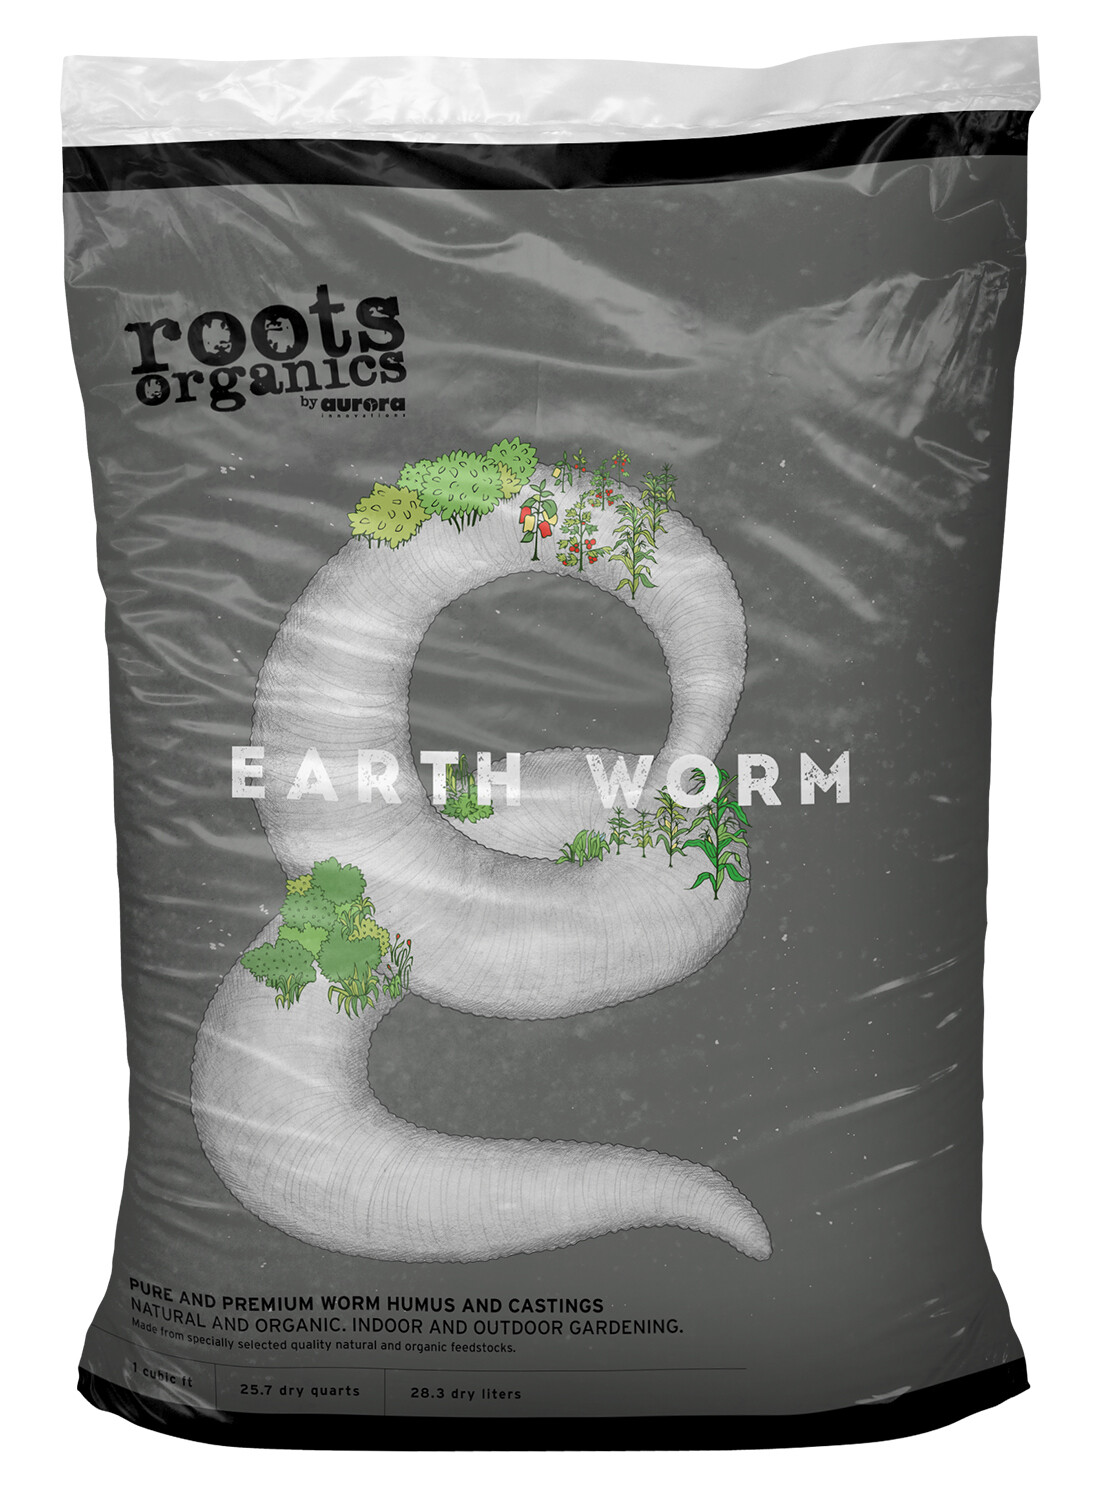 Aurora Innovations Roots Organics Earth Worm Castings 1 cubic foot